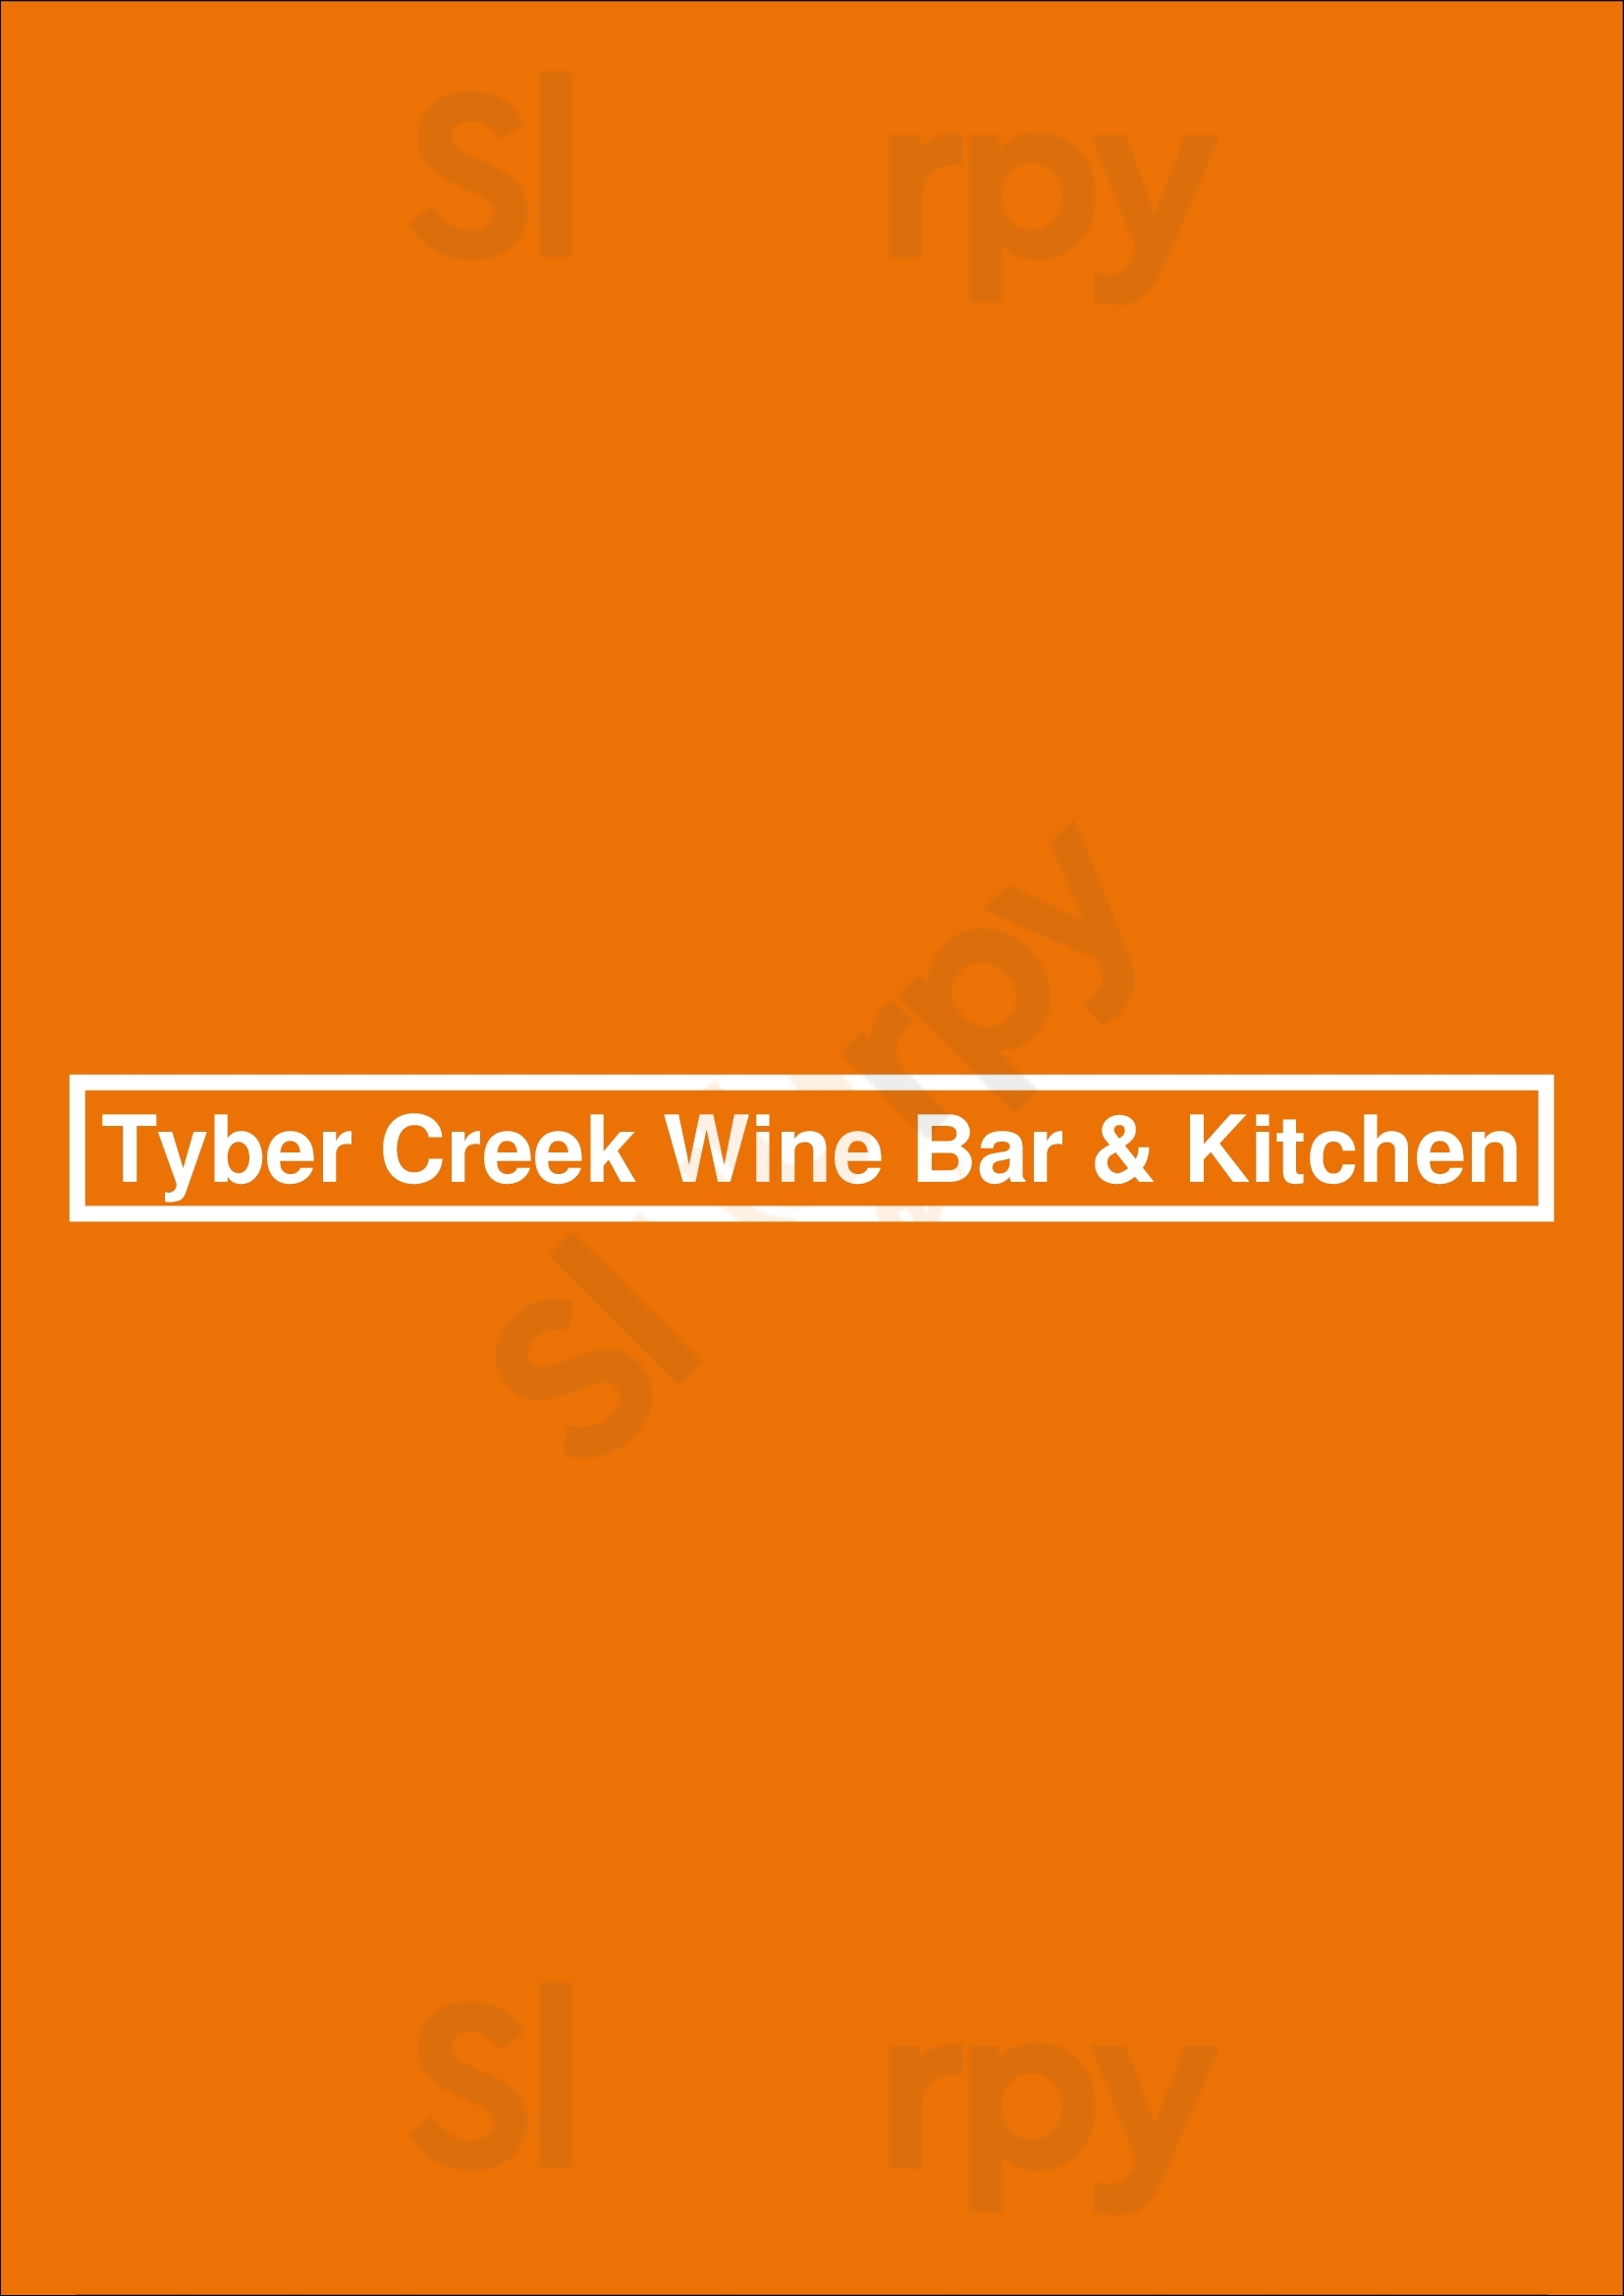 Tyber Creek Wine Bar & Kitchen Washington DC Menu - 1